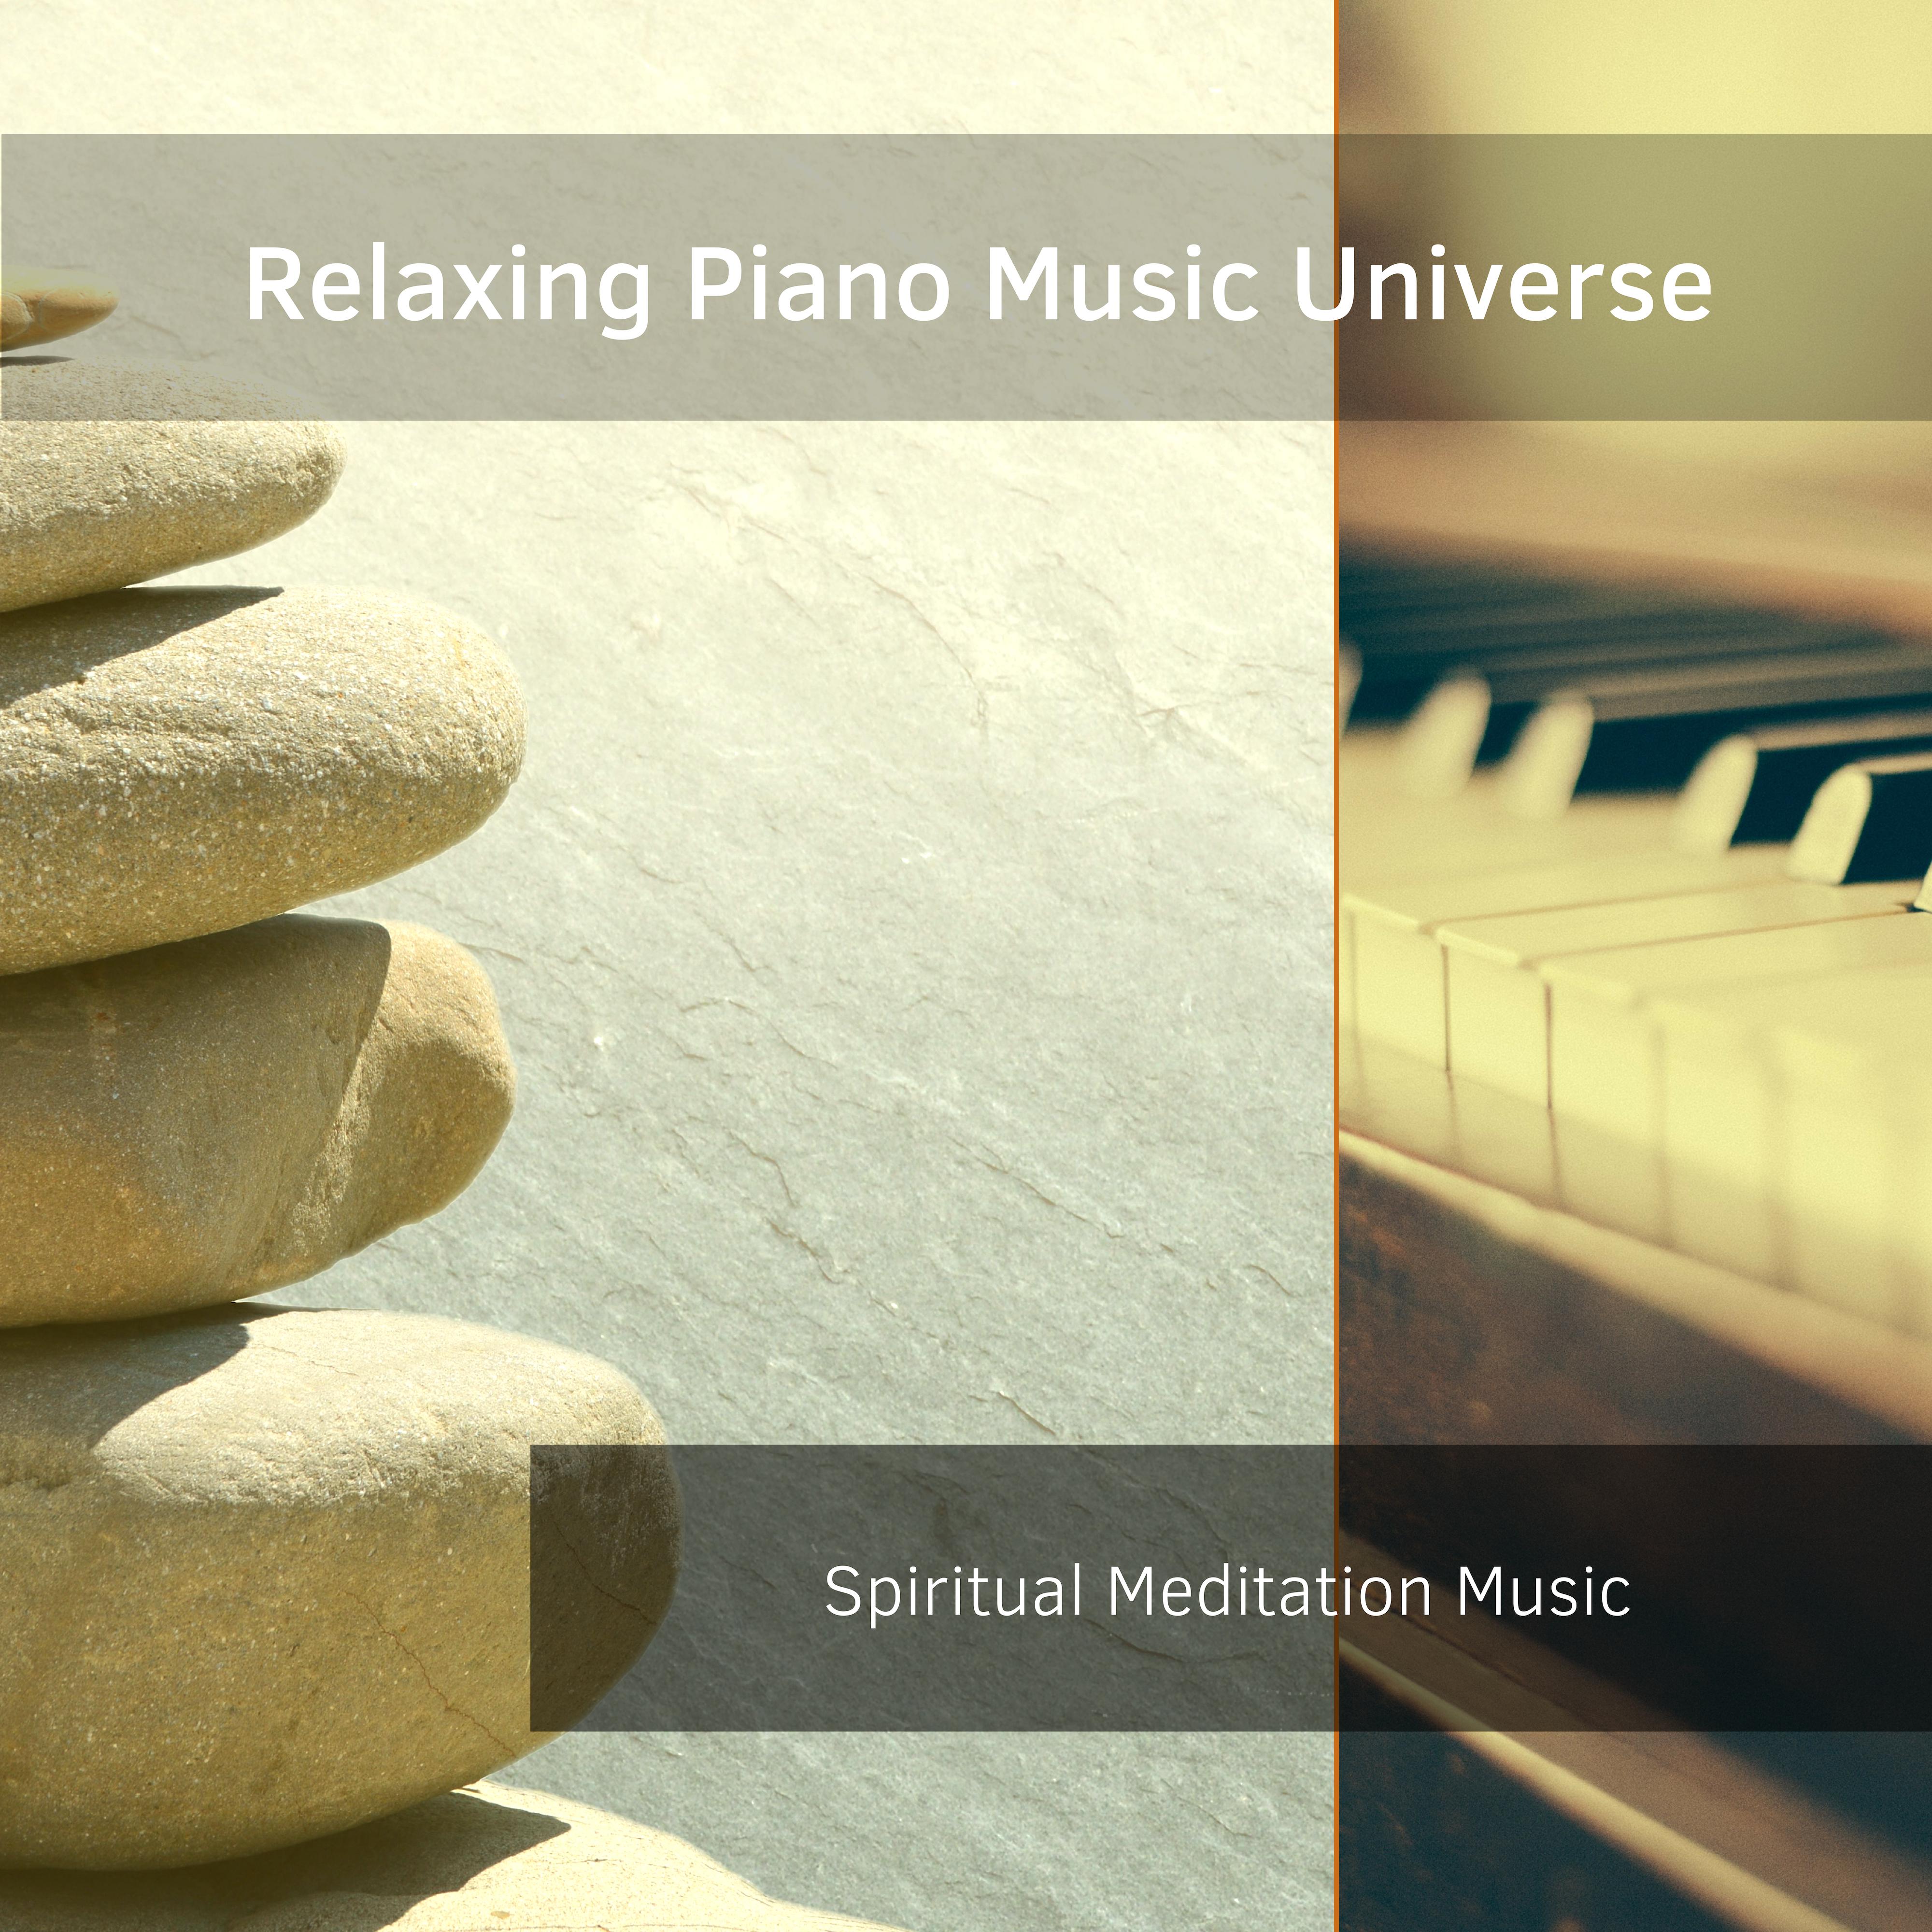 Phenomenal Music for Calm Spiritual Meditation